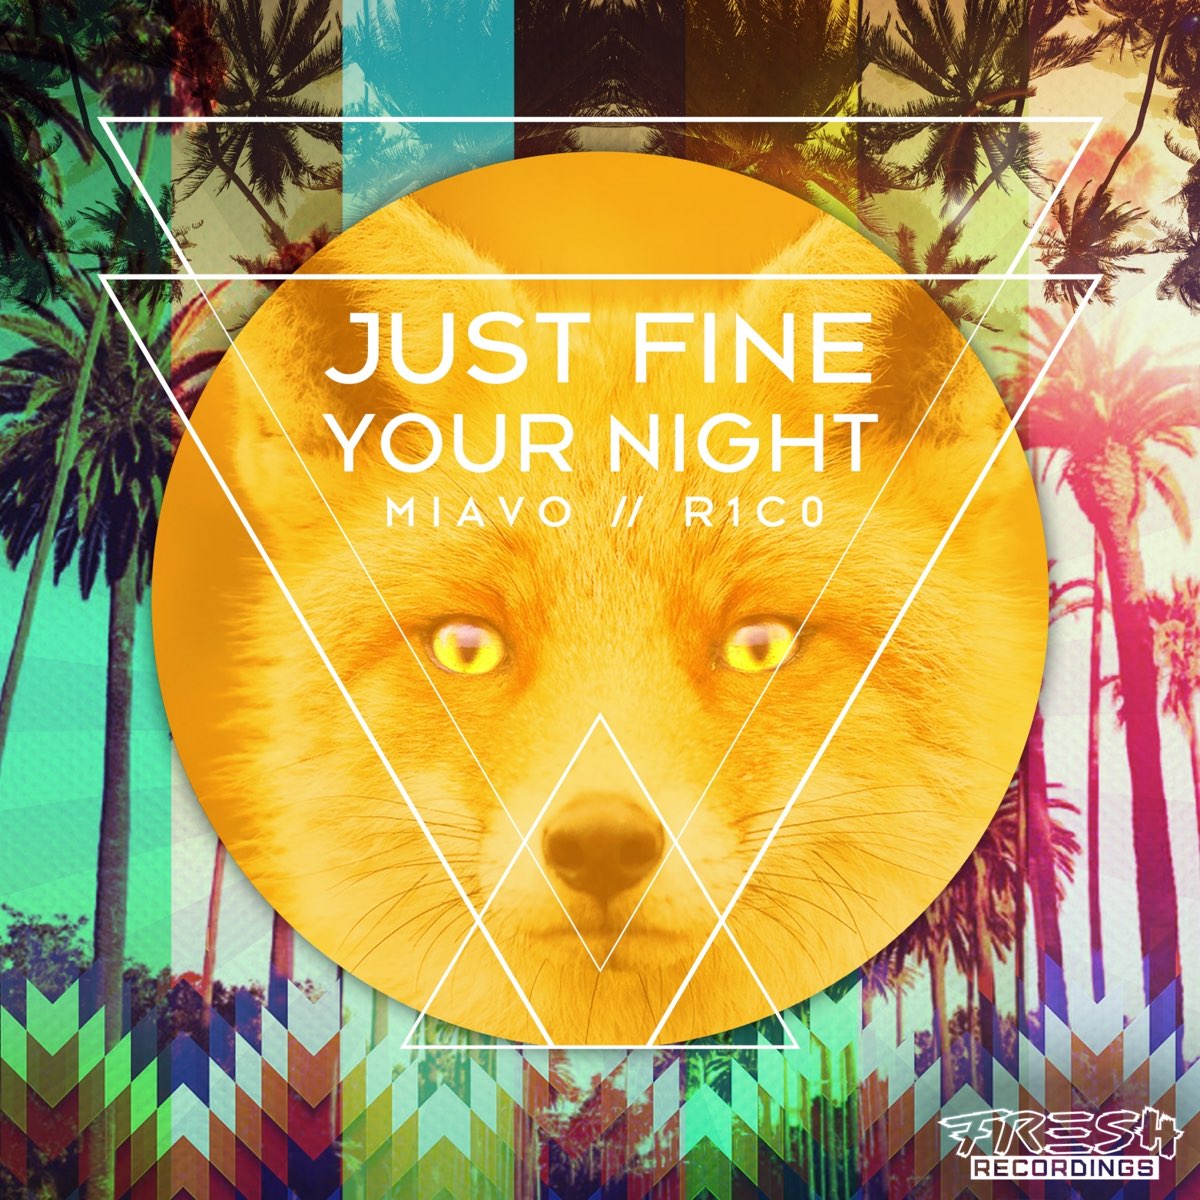 Just Fine  Your Night - Single - Album by MIAVO & R1C0 - Apple Music